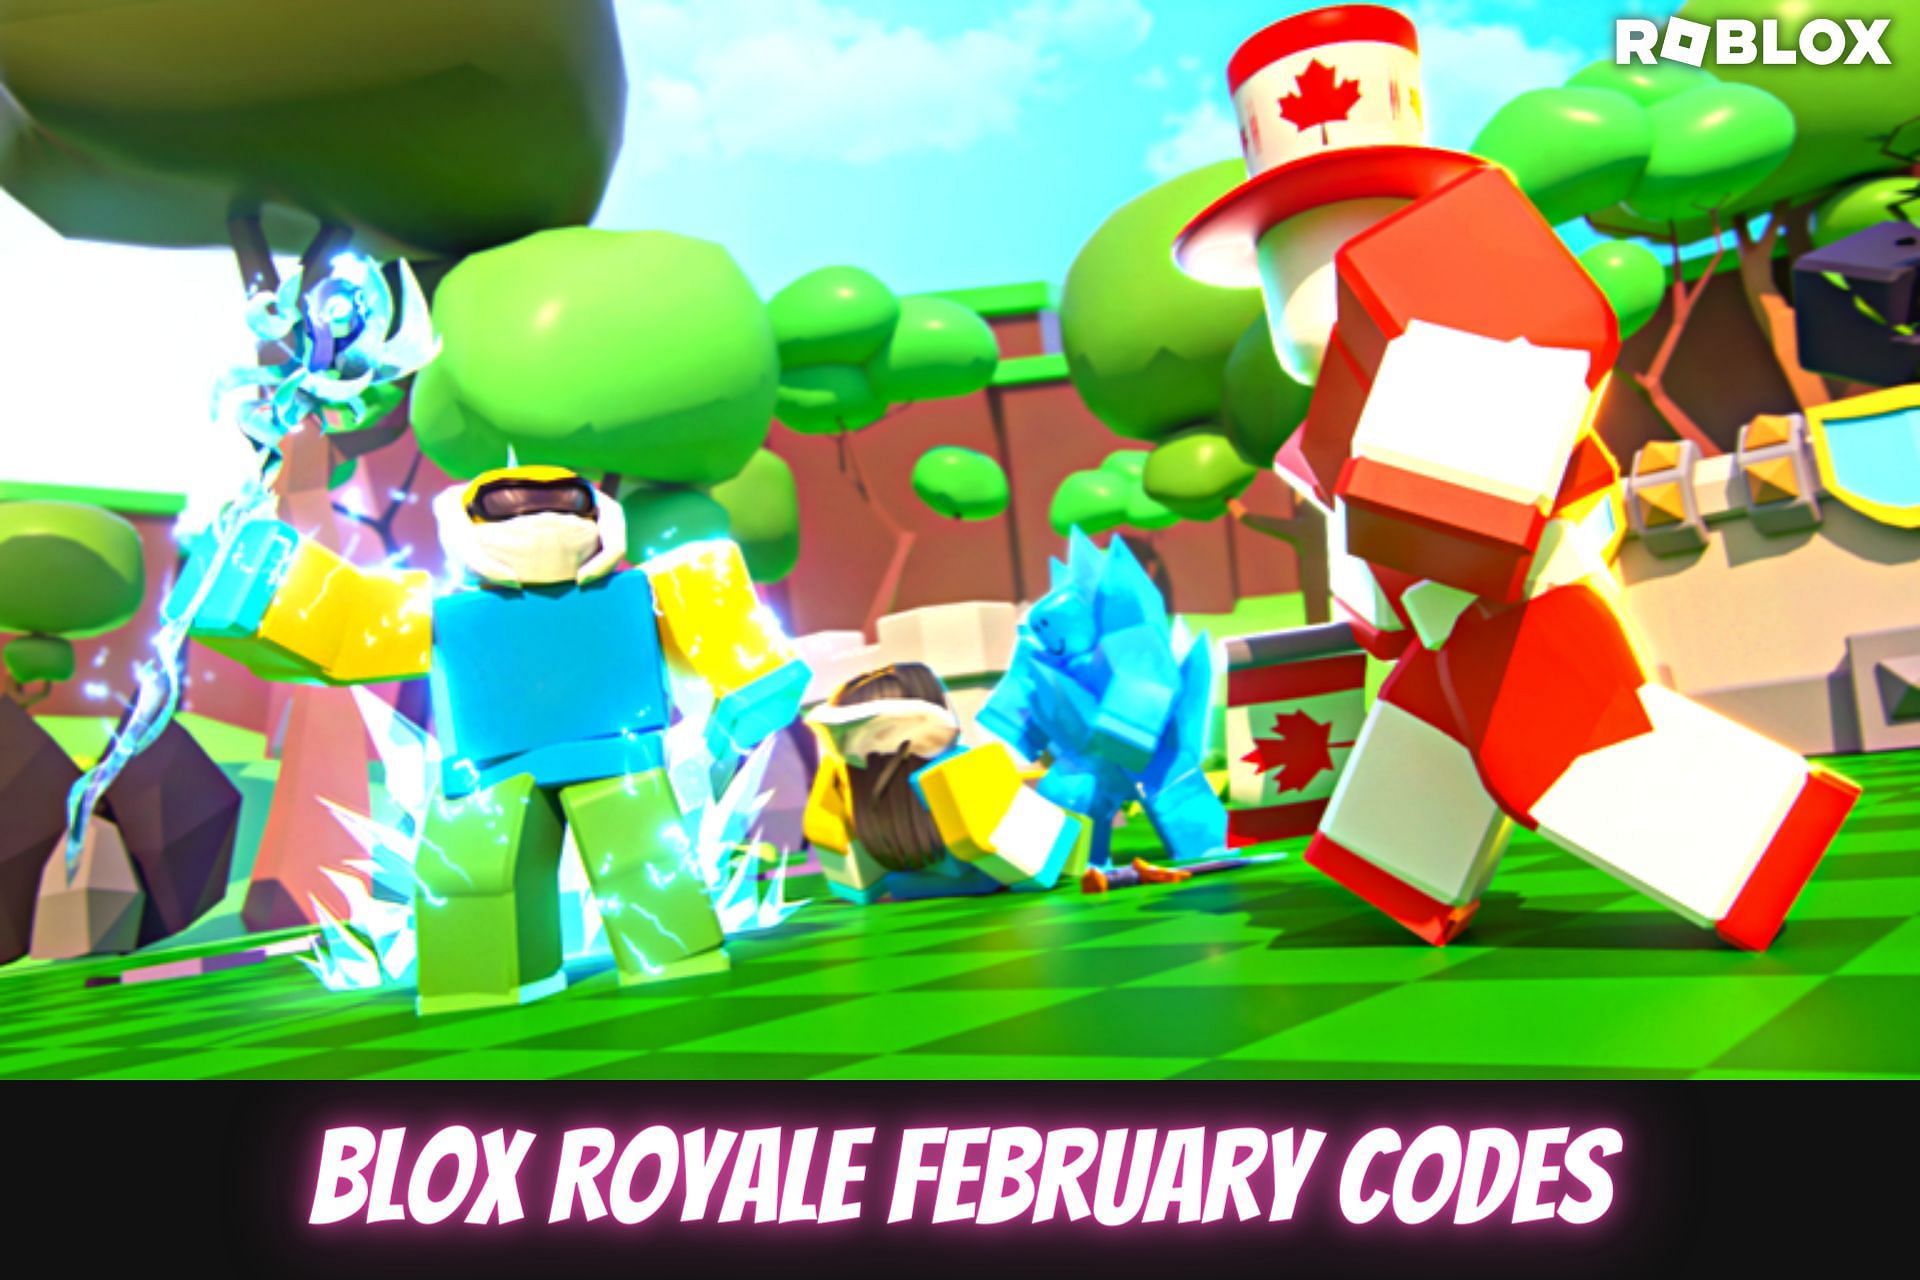 Roblox Legend Piece Codes (February 2023)